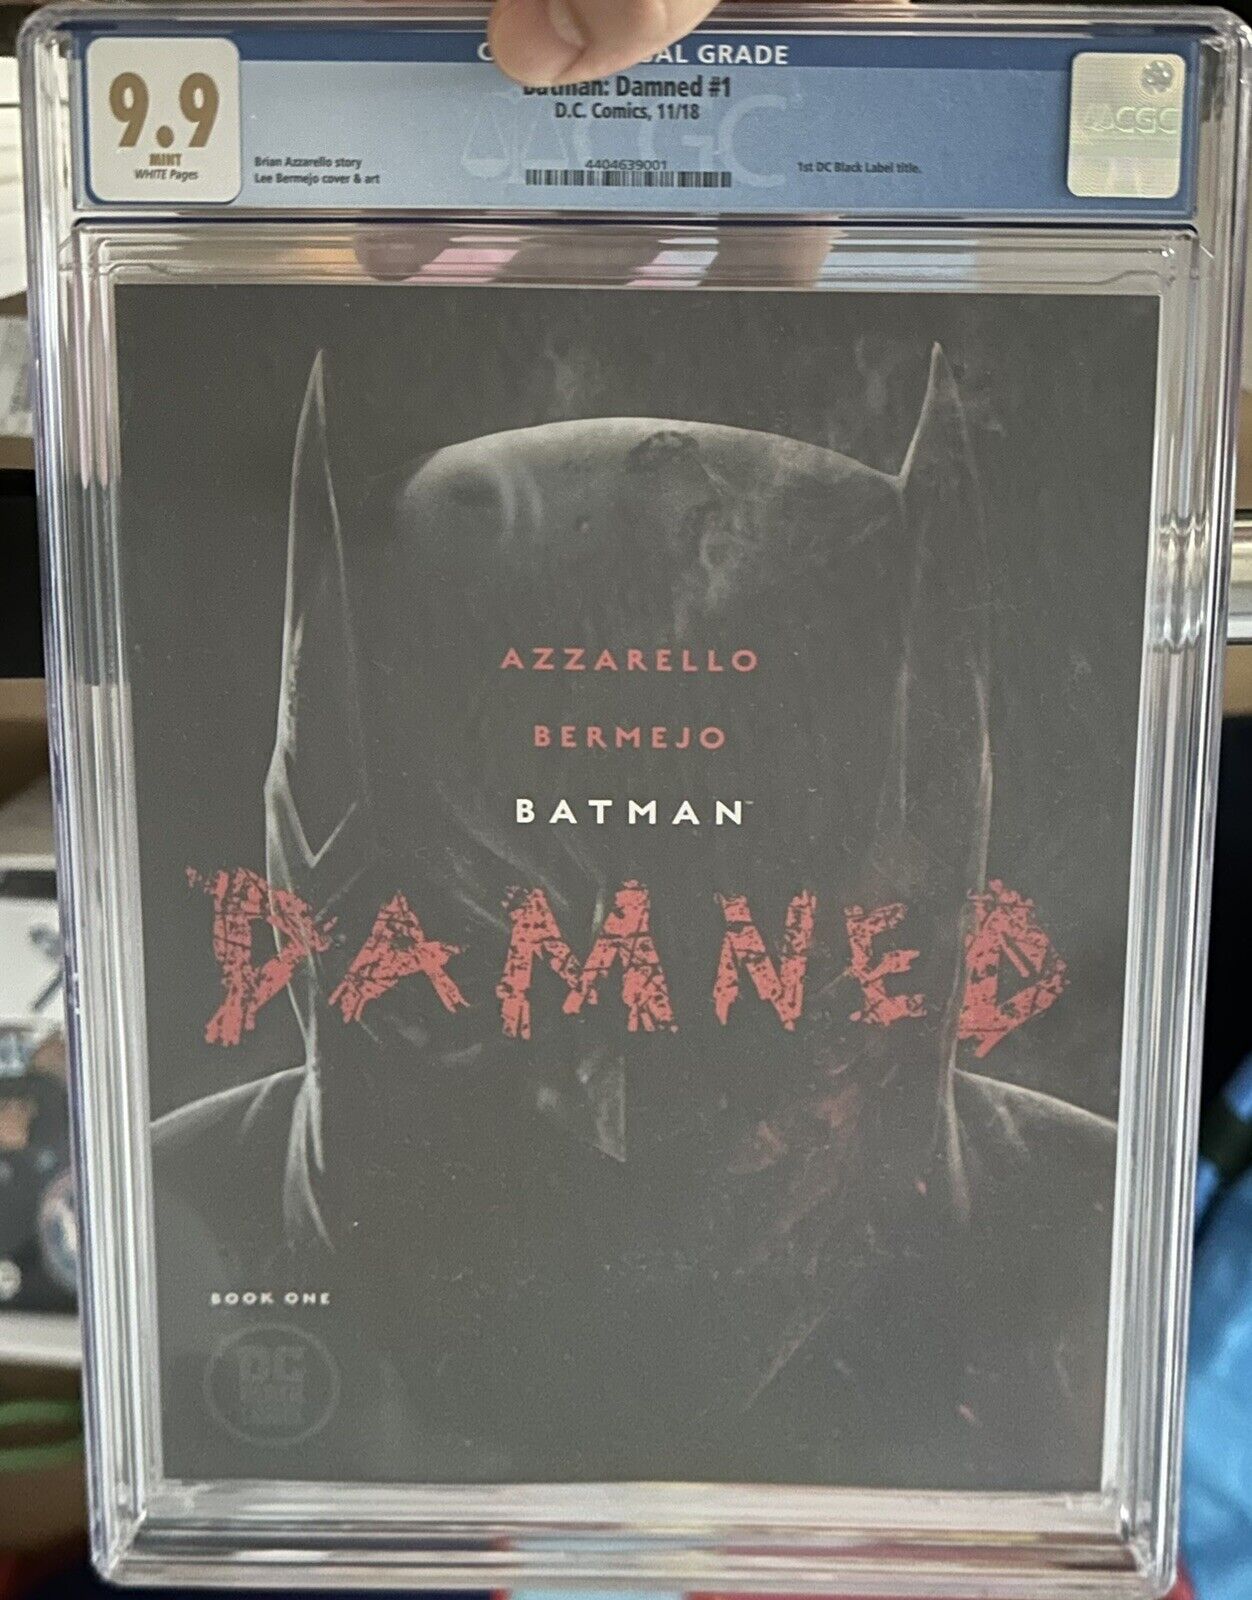 BATMAN: DAMNED #1A CGC 9.9 MINT 1st Print Unedited Bat-Member White Pages Key DC